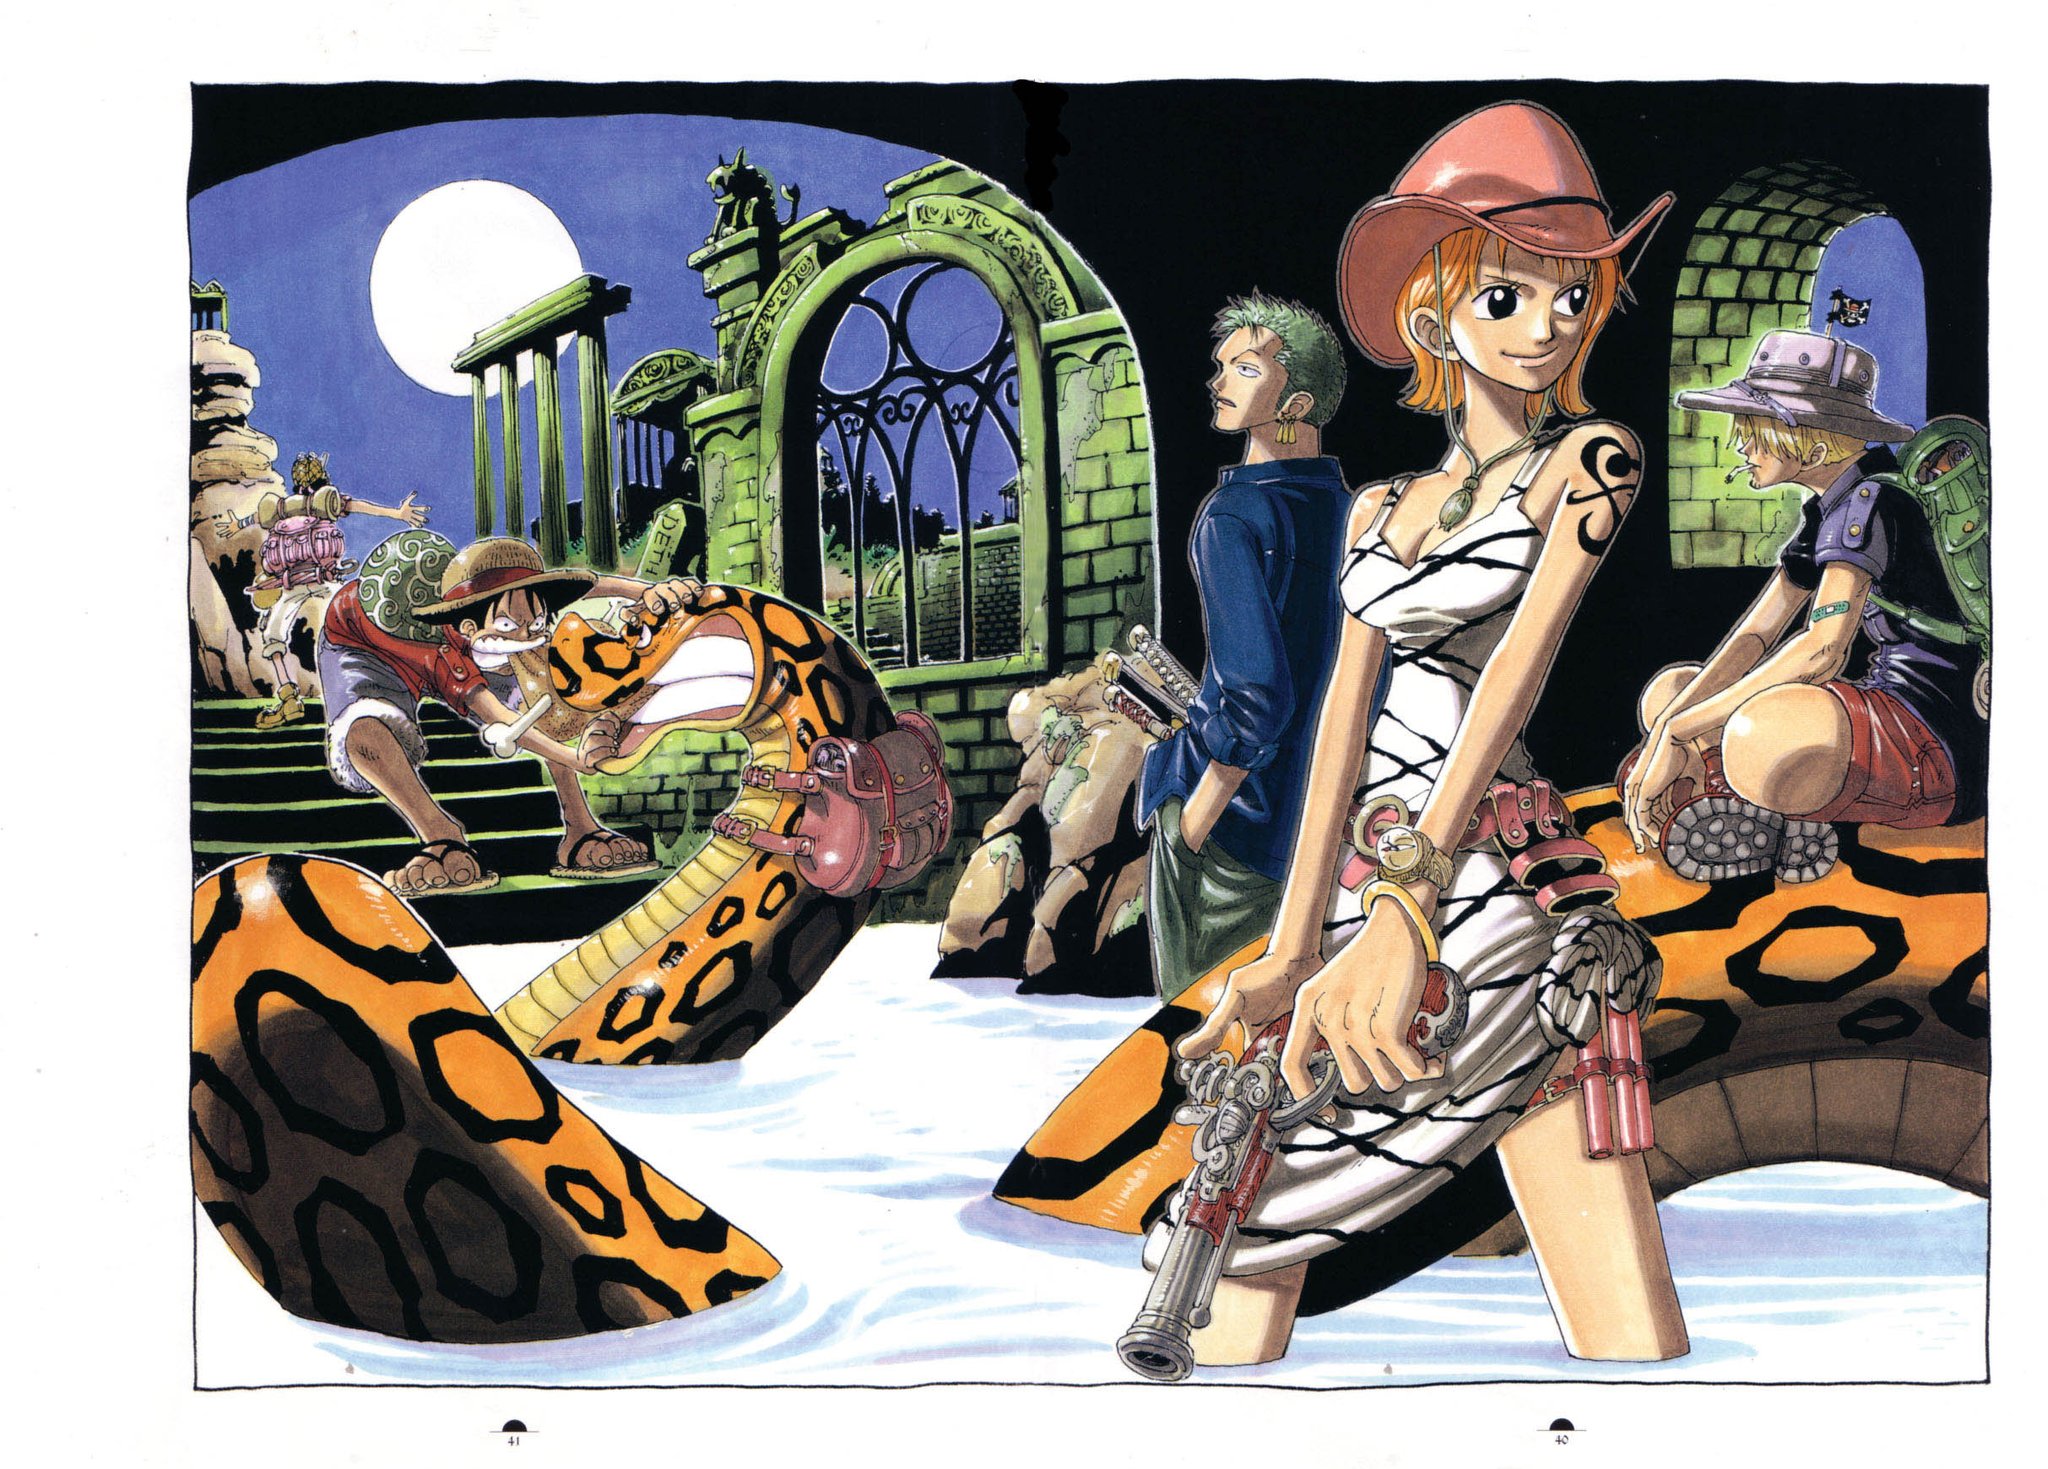 Manga Artwork One Piece ワンピース By Eiichiro Oda 尾田栄一郎 Color Spreads 1 Chapter 1 19 07 1997 T Co Dmuxycion2 Twitter